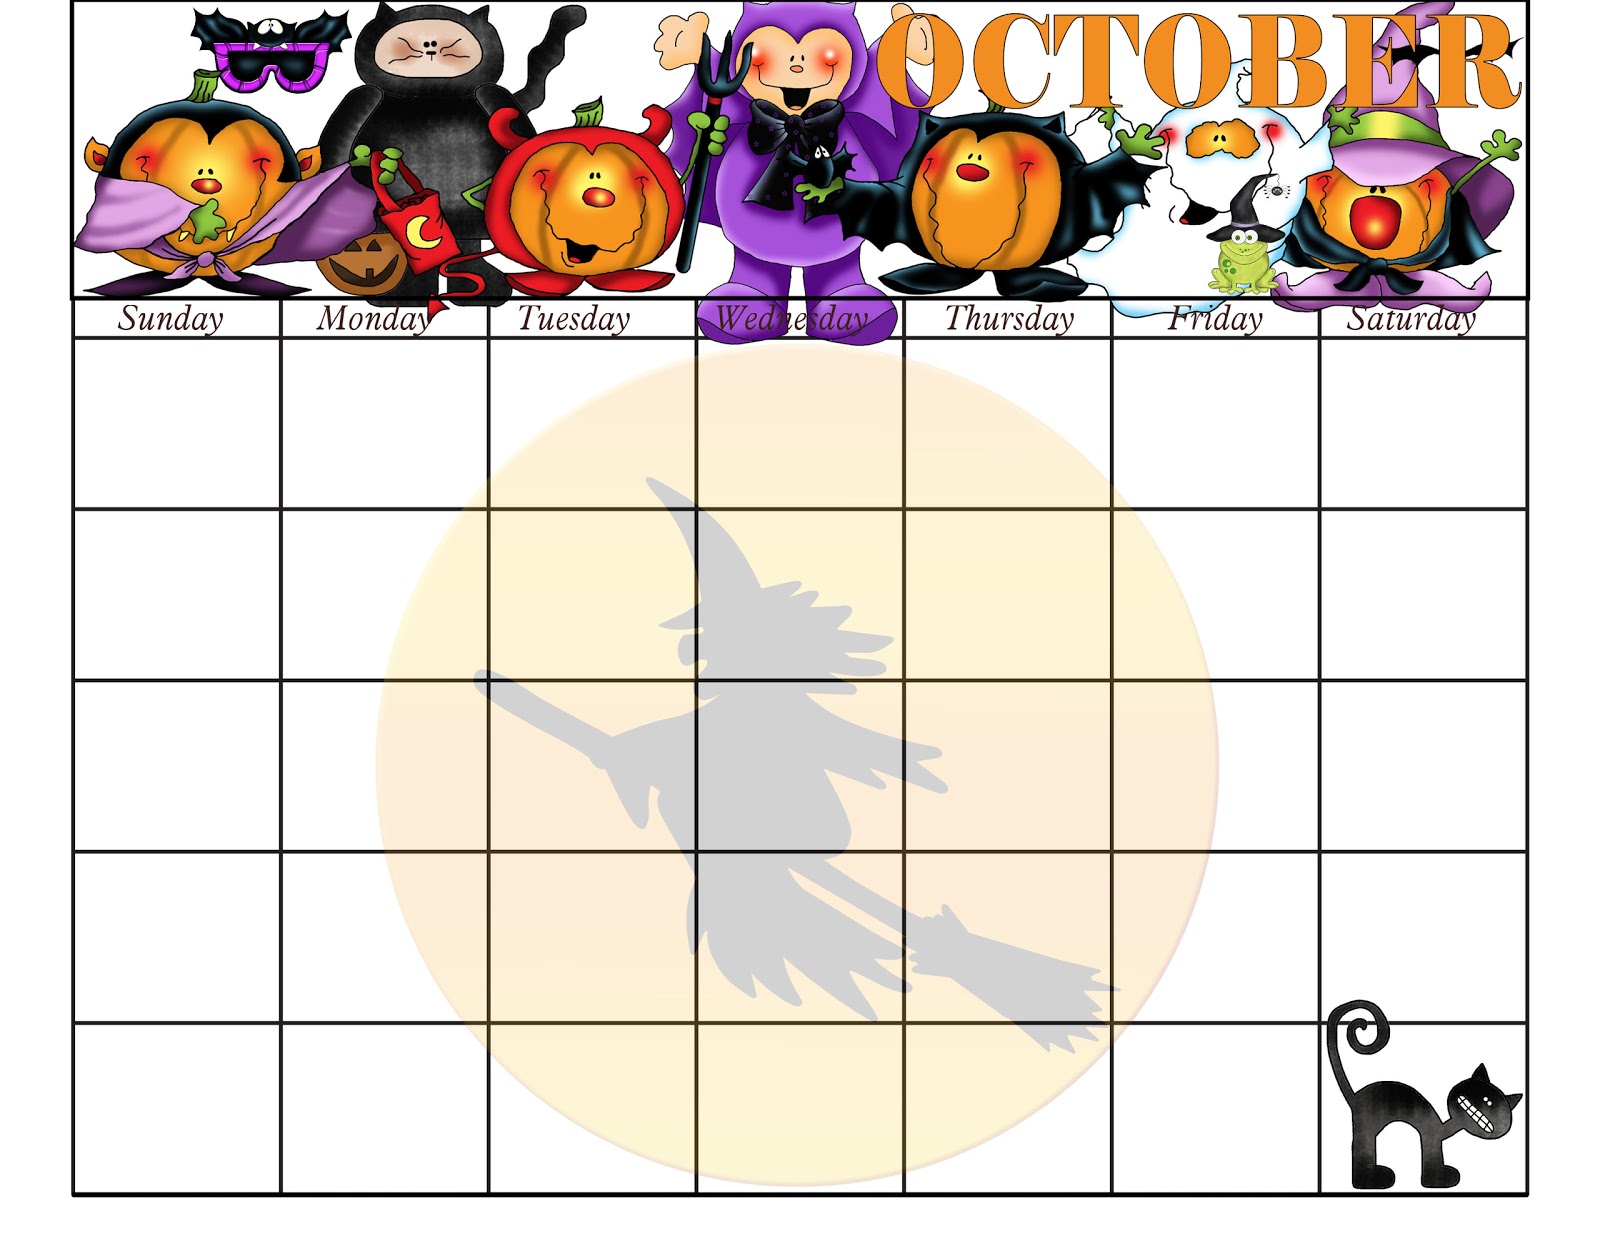 patty-wraps-october-calendar